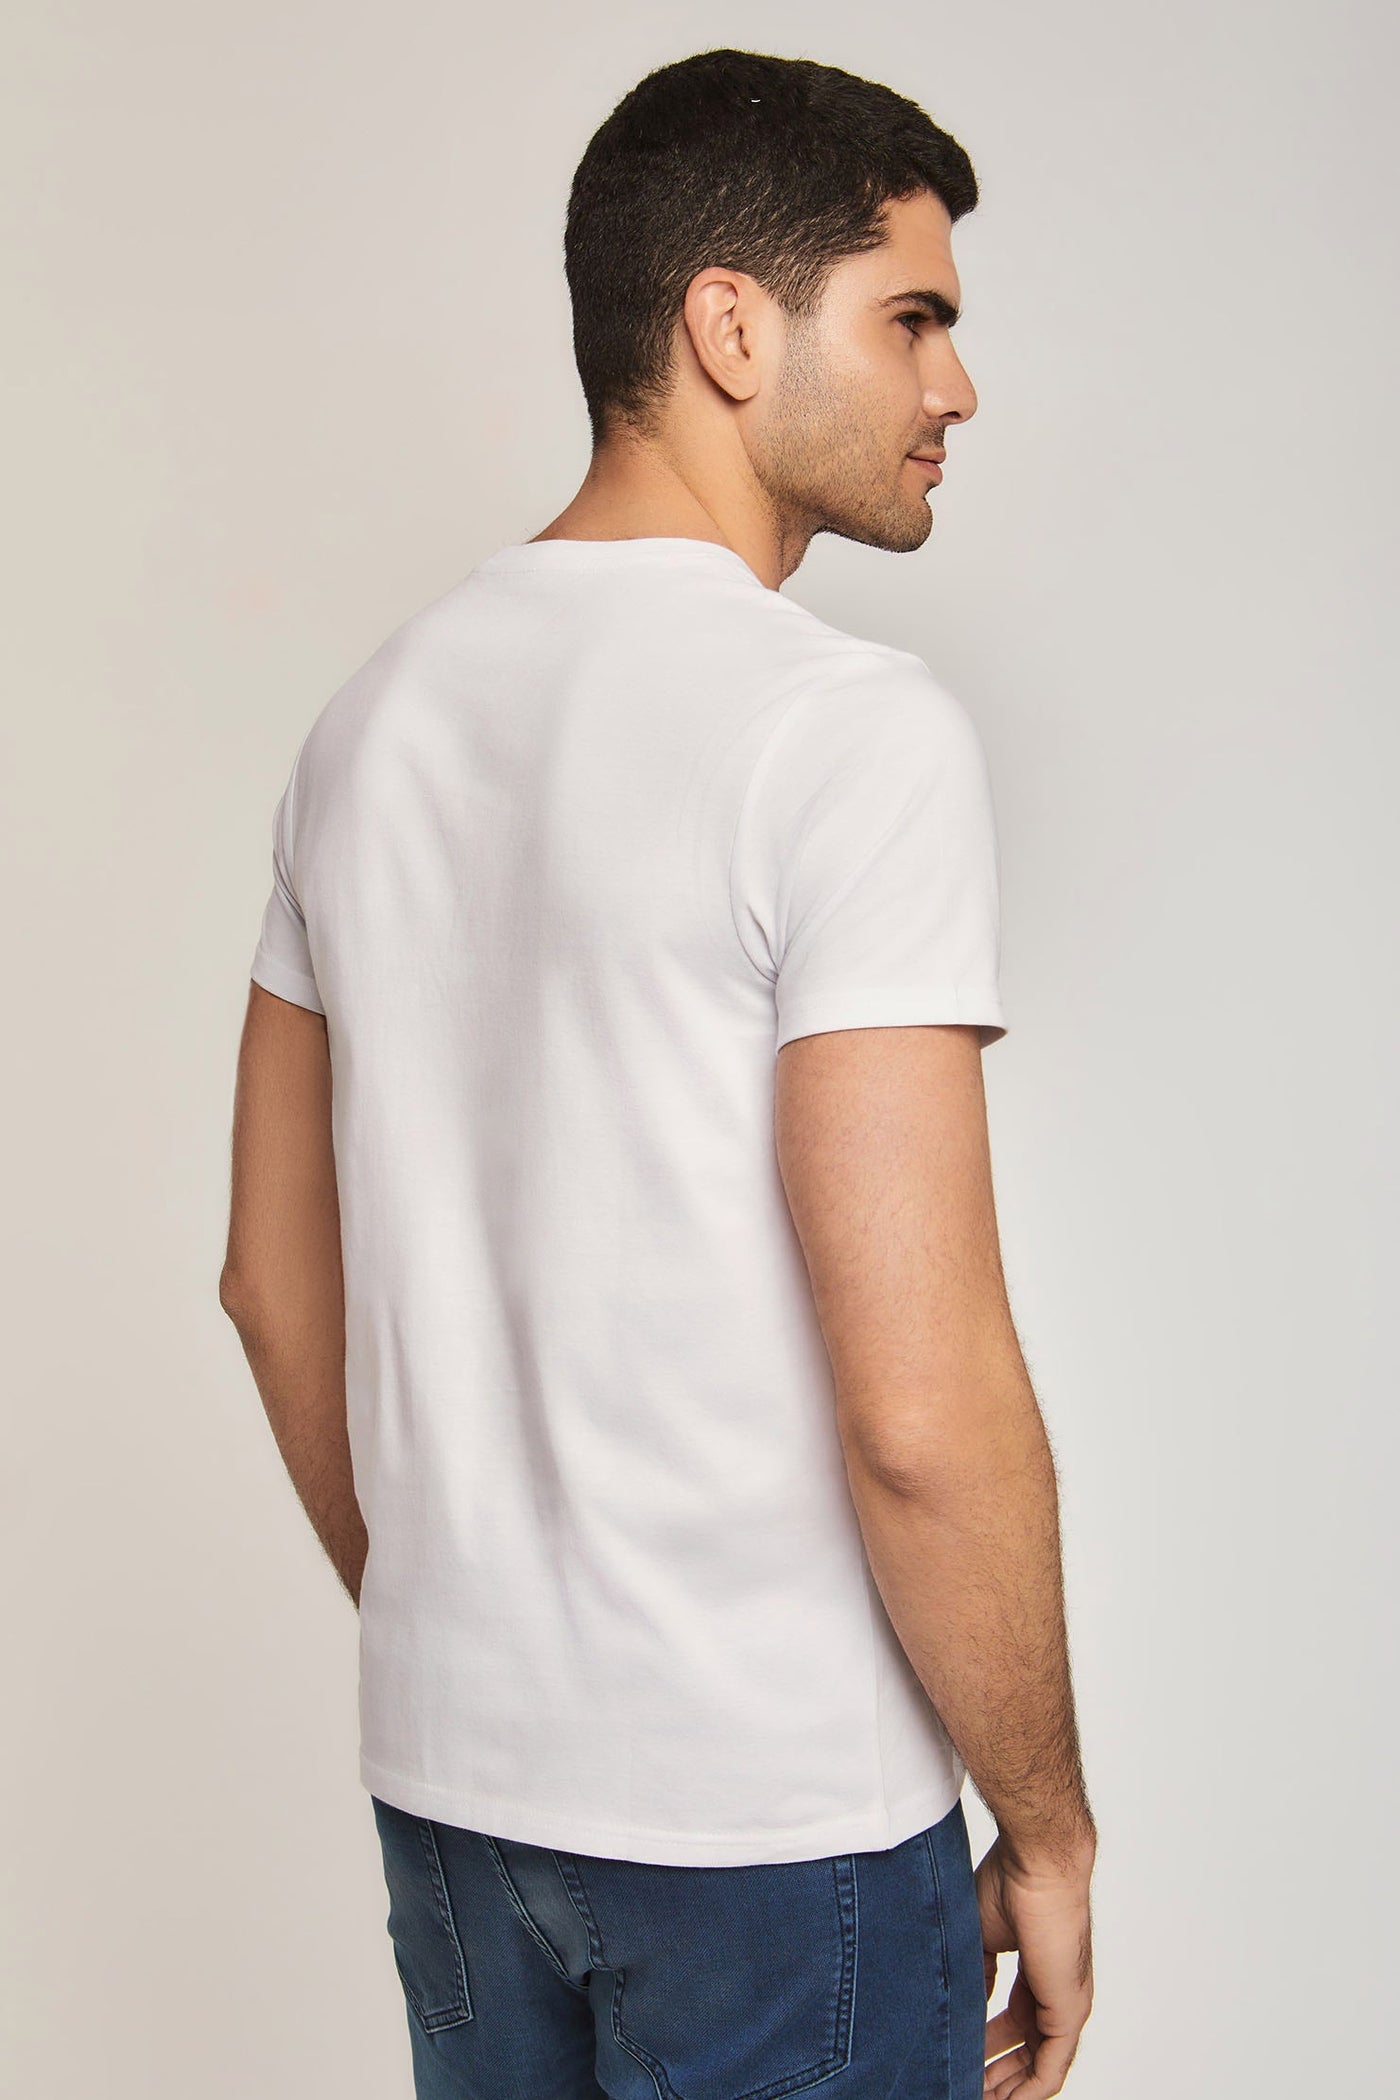 T-Shirt - Printed - Half Sleeve